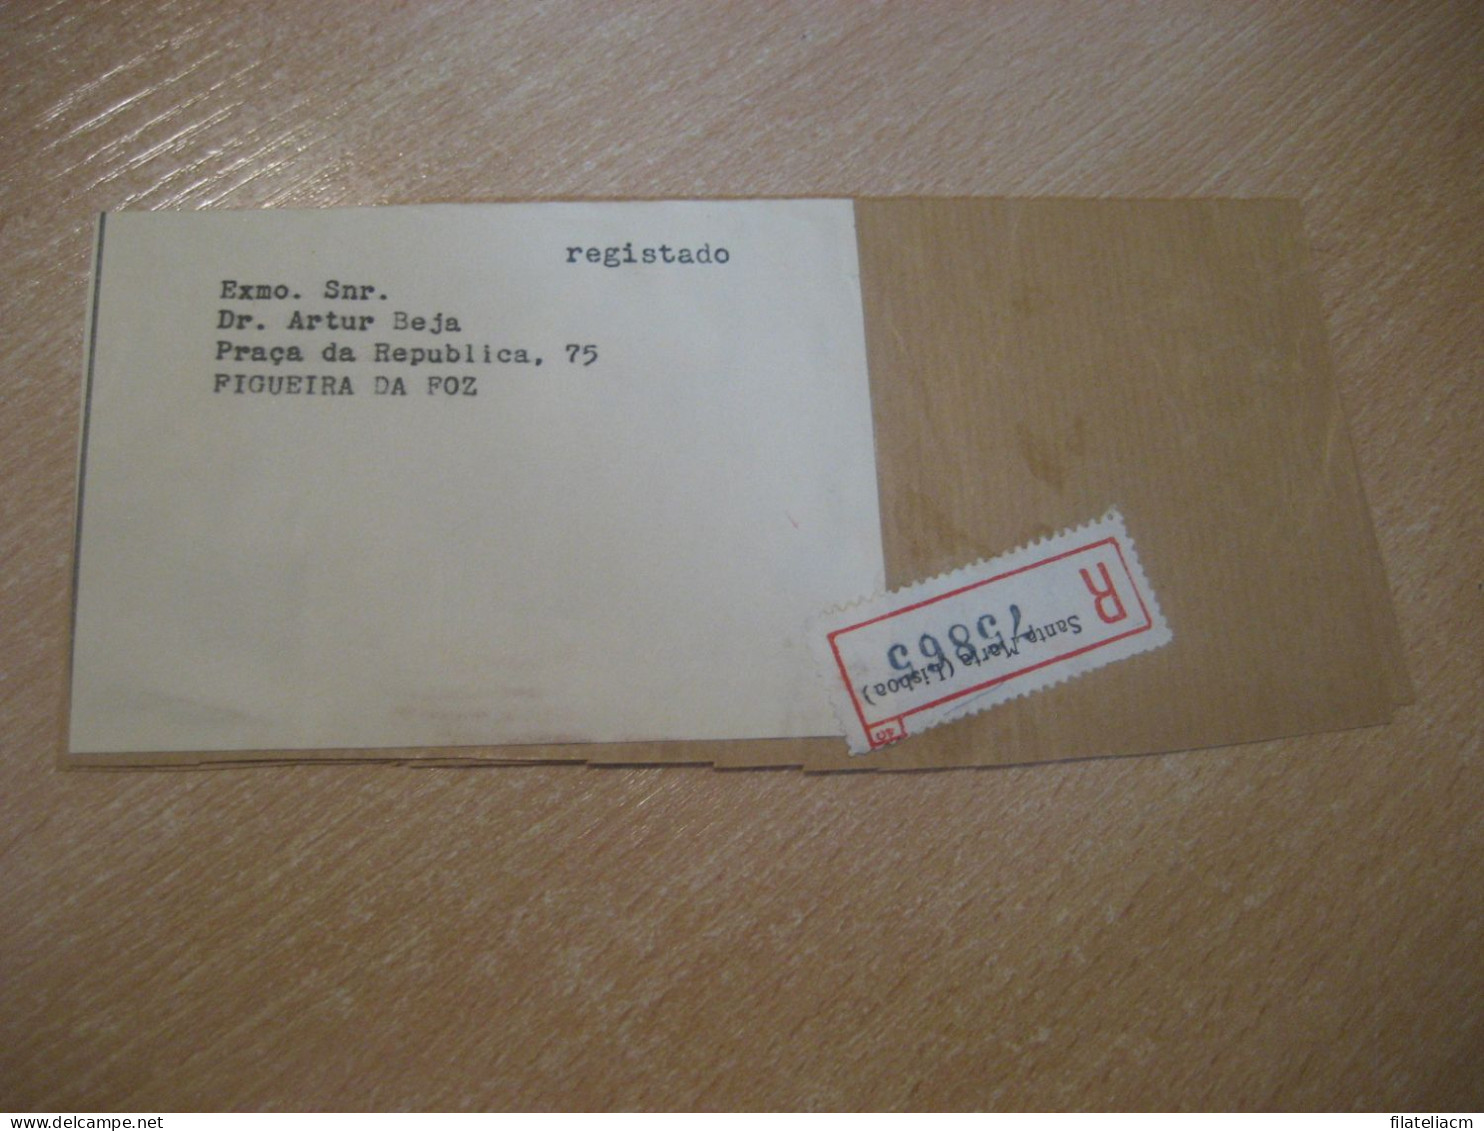 LISBOA 1960 To Figueira Da Foz BINACA Pasta Elixir Dentifricos Pharmacy Registered Meter Mail Cut Cuted Cover PORTUGAL - Briefe U. Dokumente